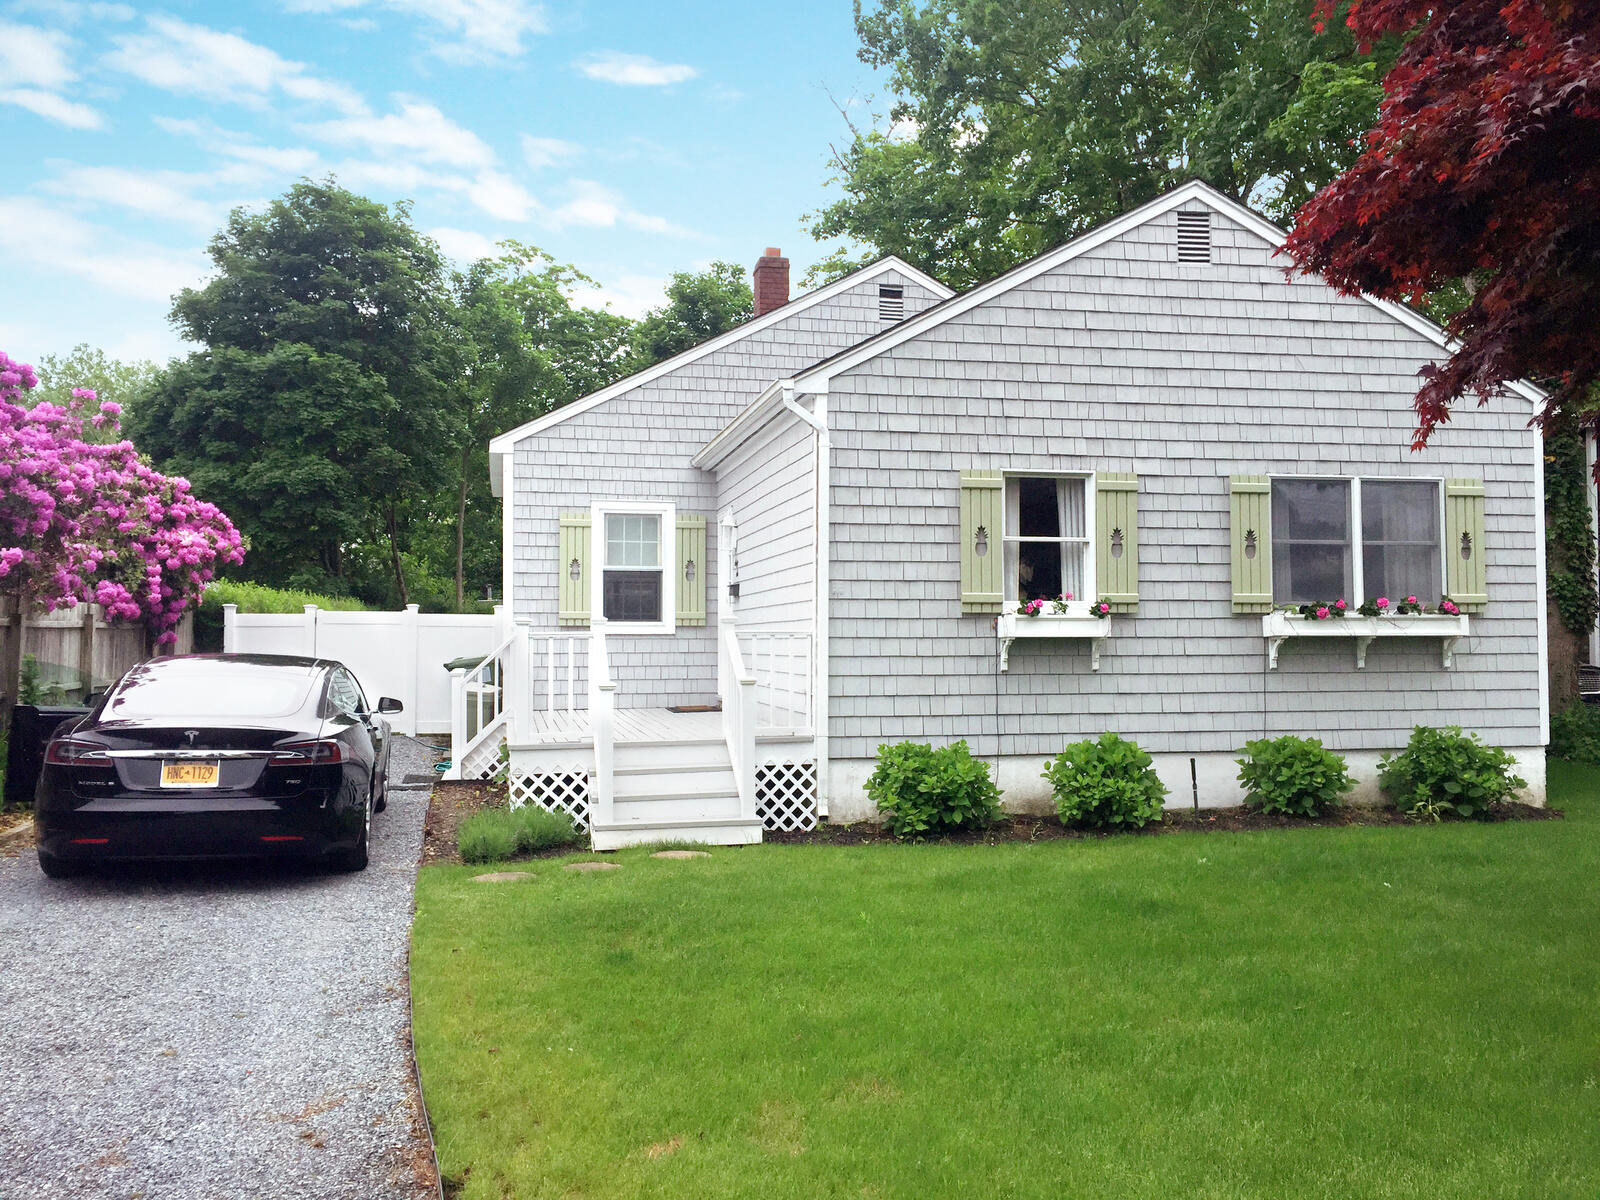 Rental Property at Village Of Southampton, Village Of Southampton, Hamptons, NY - Bedrooms: 2 
Bathrooms: 2  - $27,000 MO.